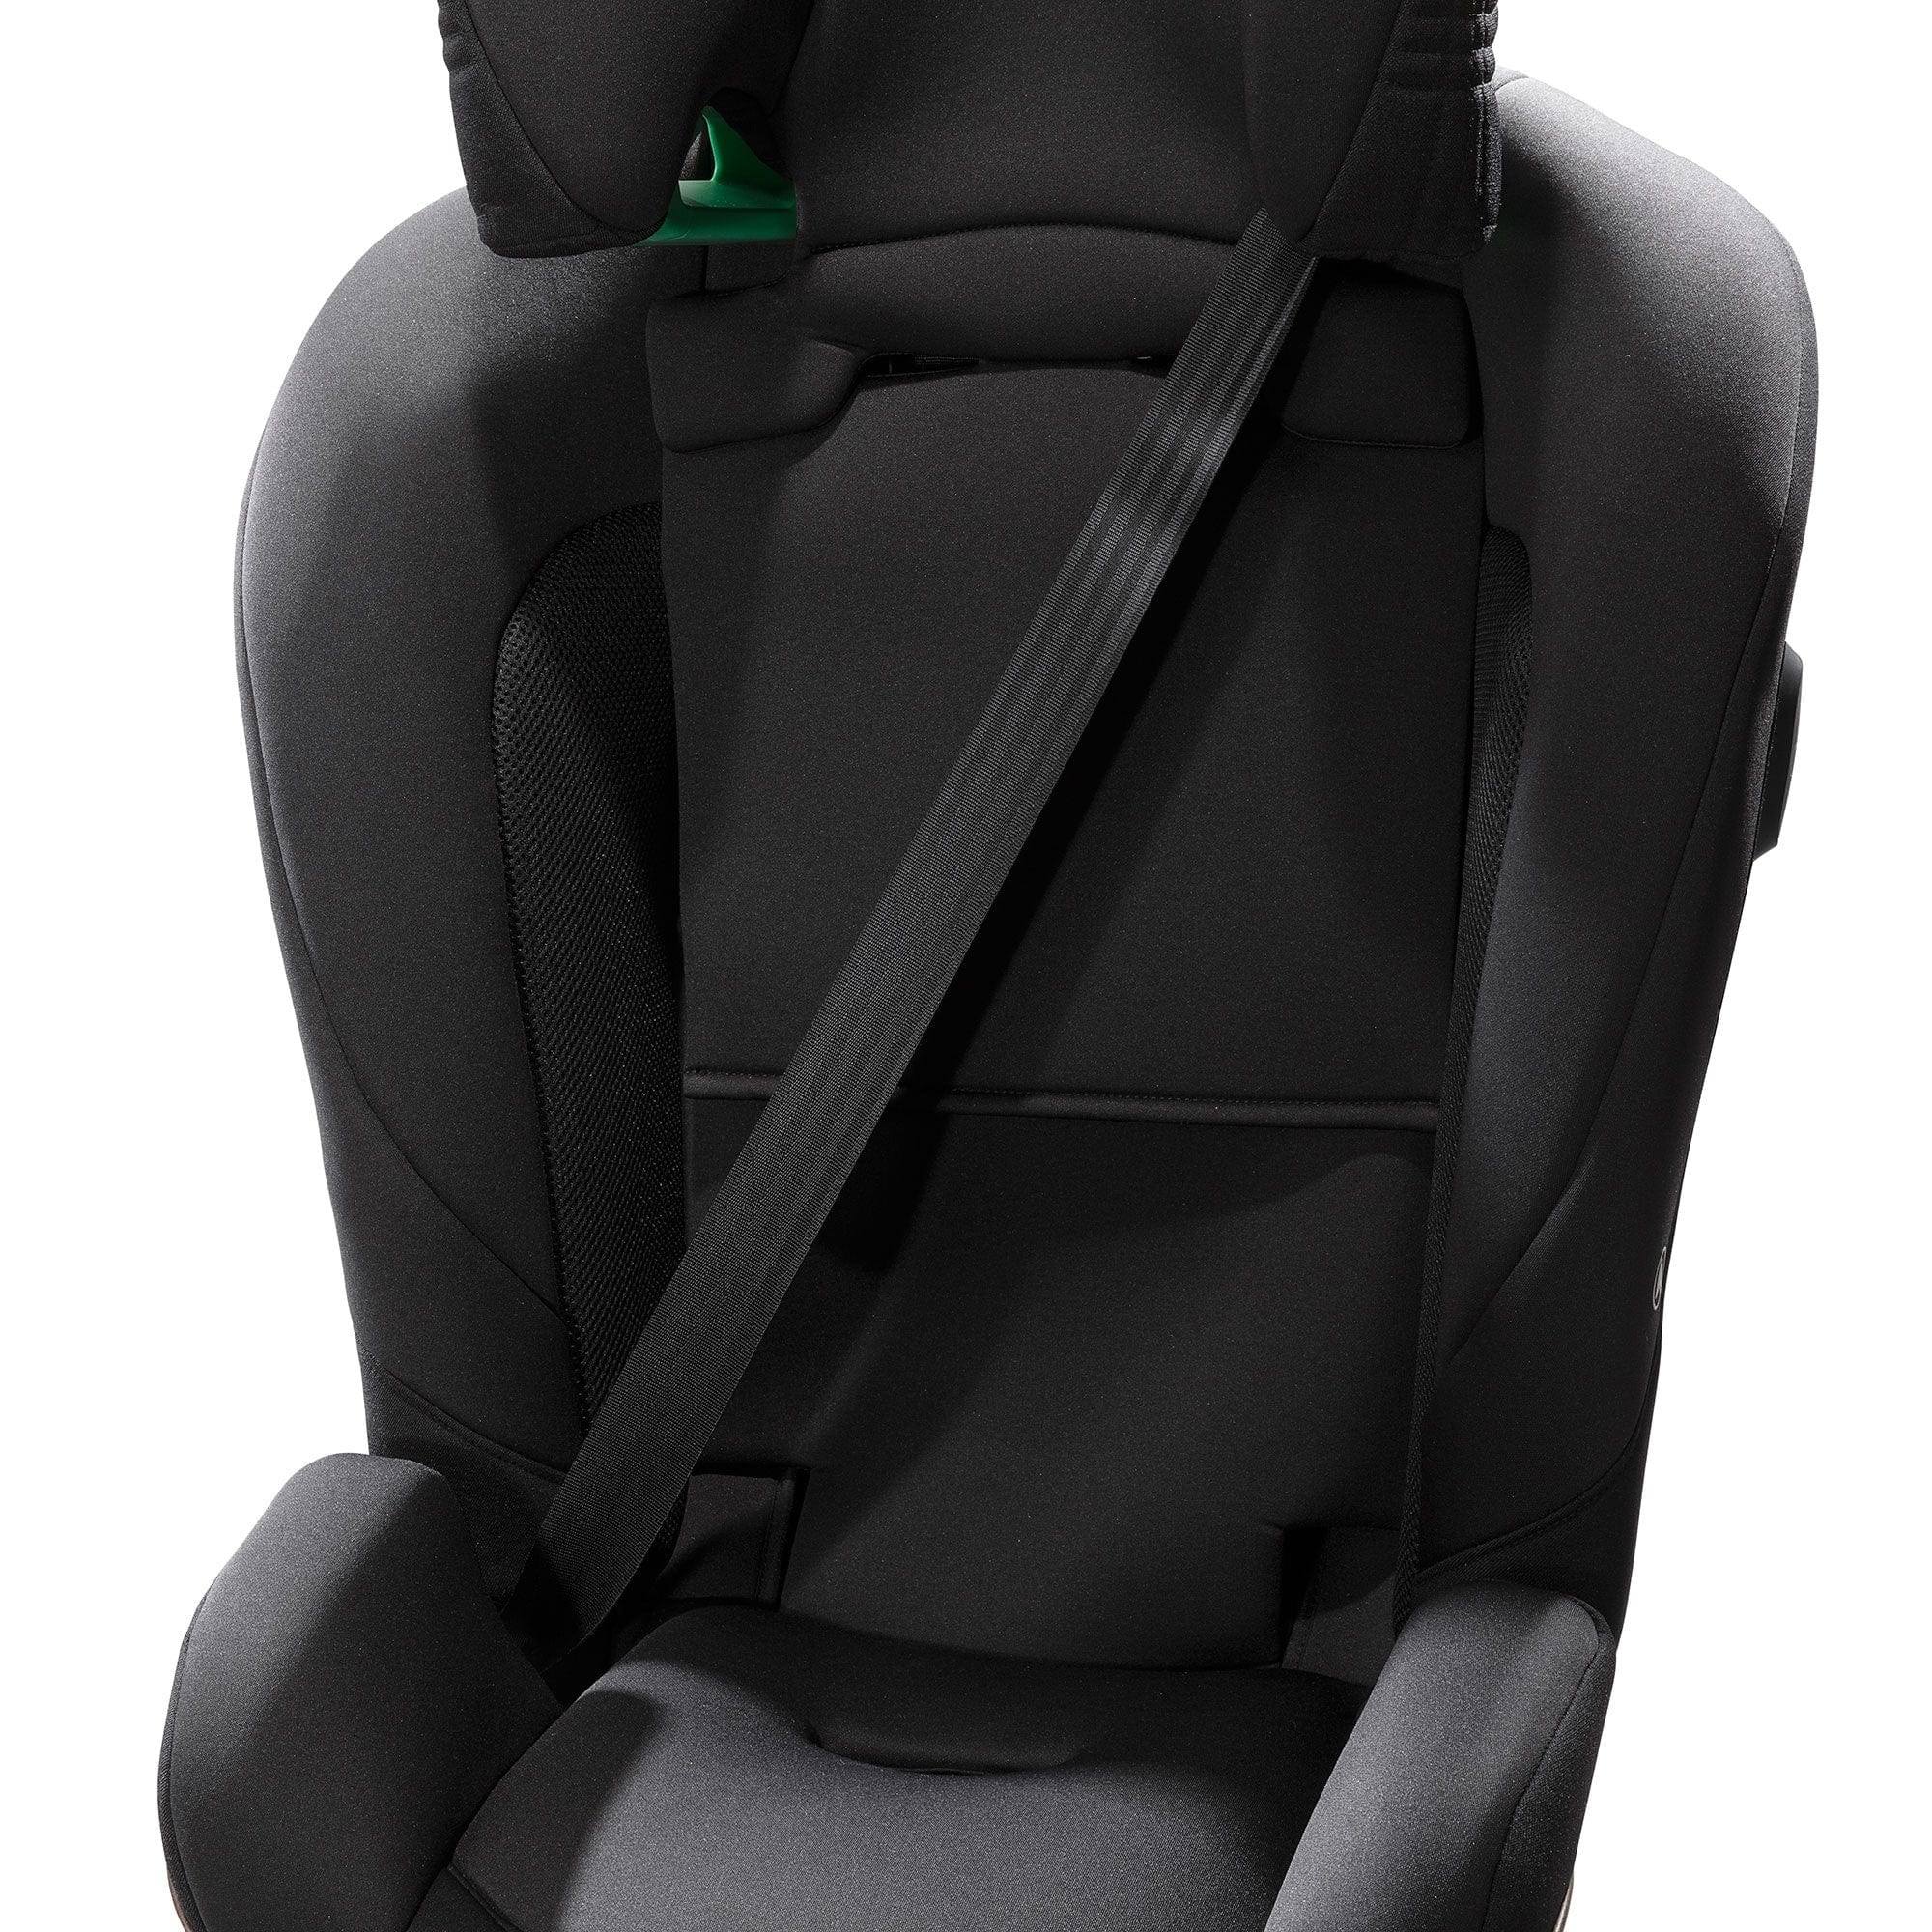 Joie i-Size car seats Joie i-Plenti i-size Car Seat in Eclipse C1908BAECL000